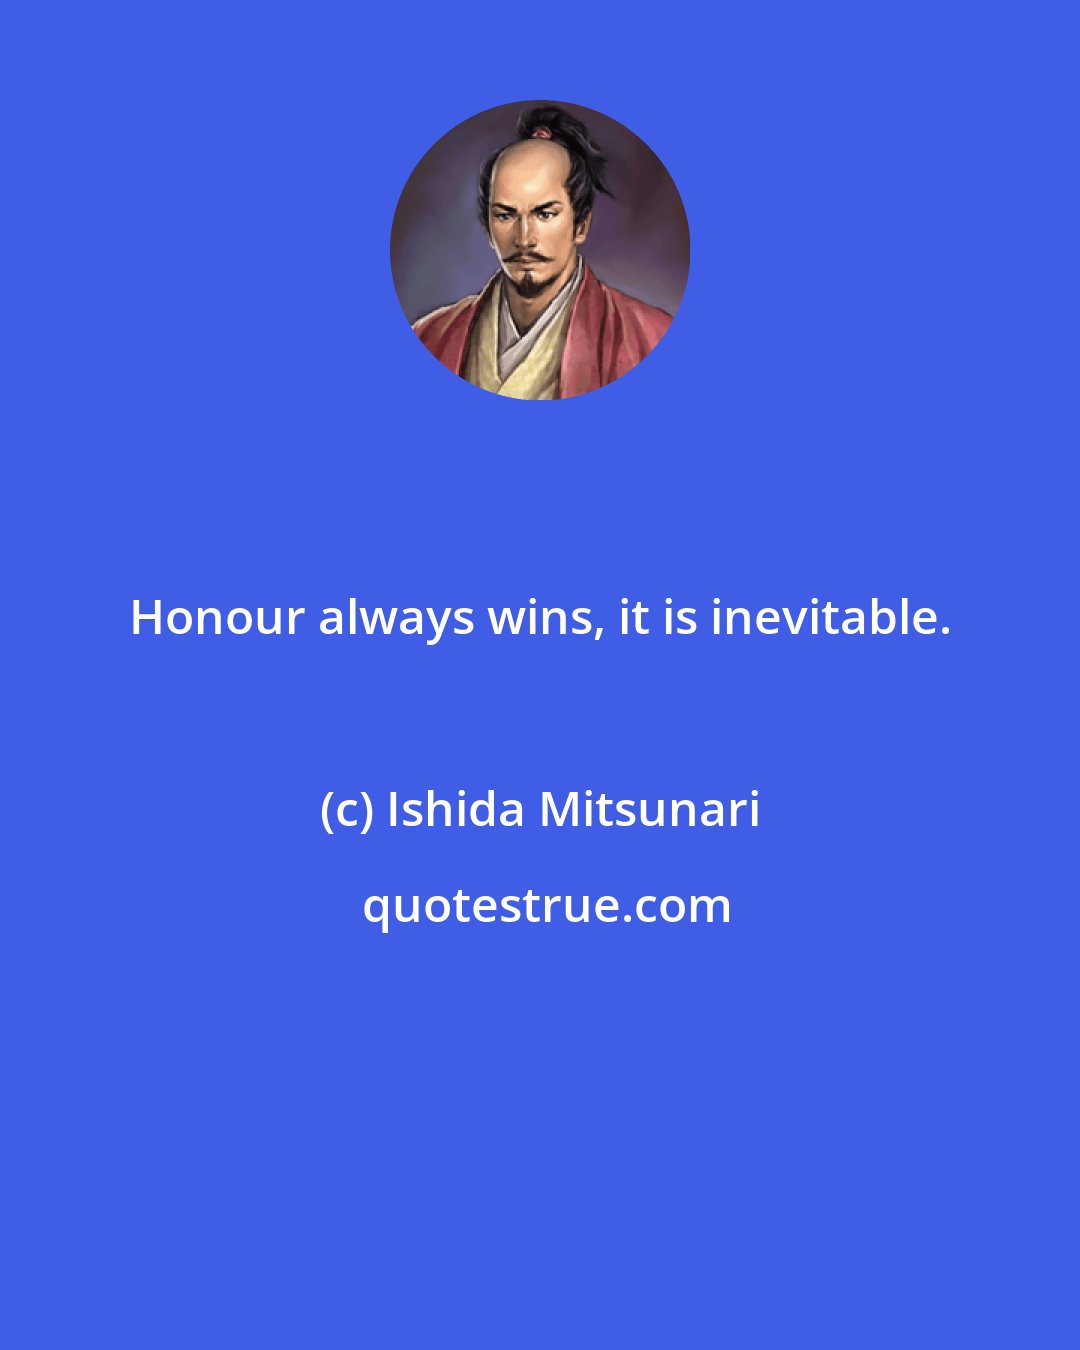 Ishida Mitsunari: Honour always wins, it is inevitable.